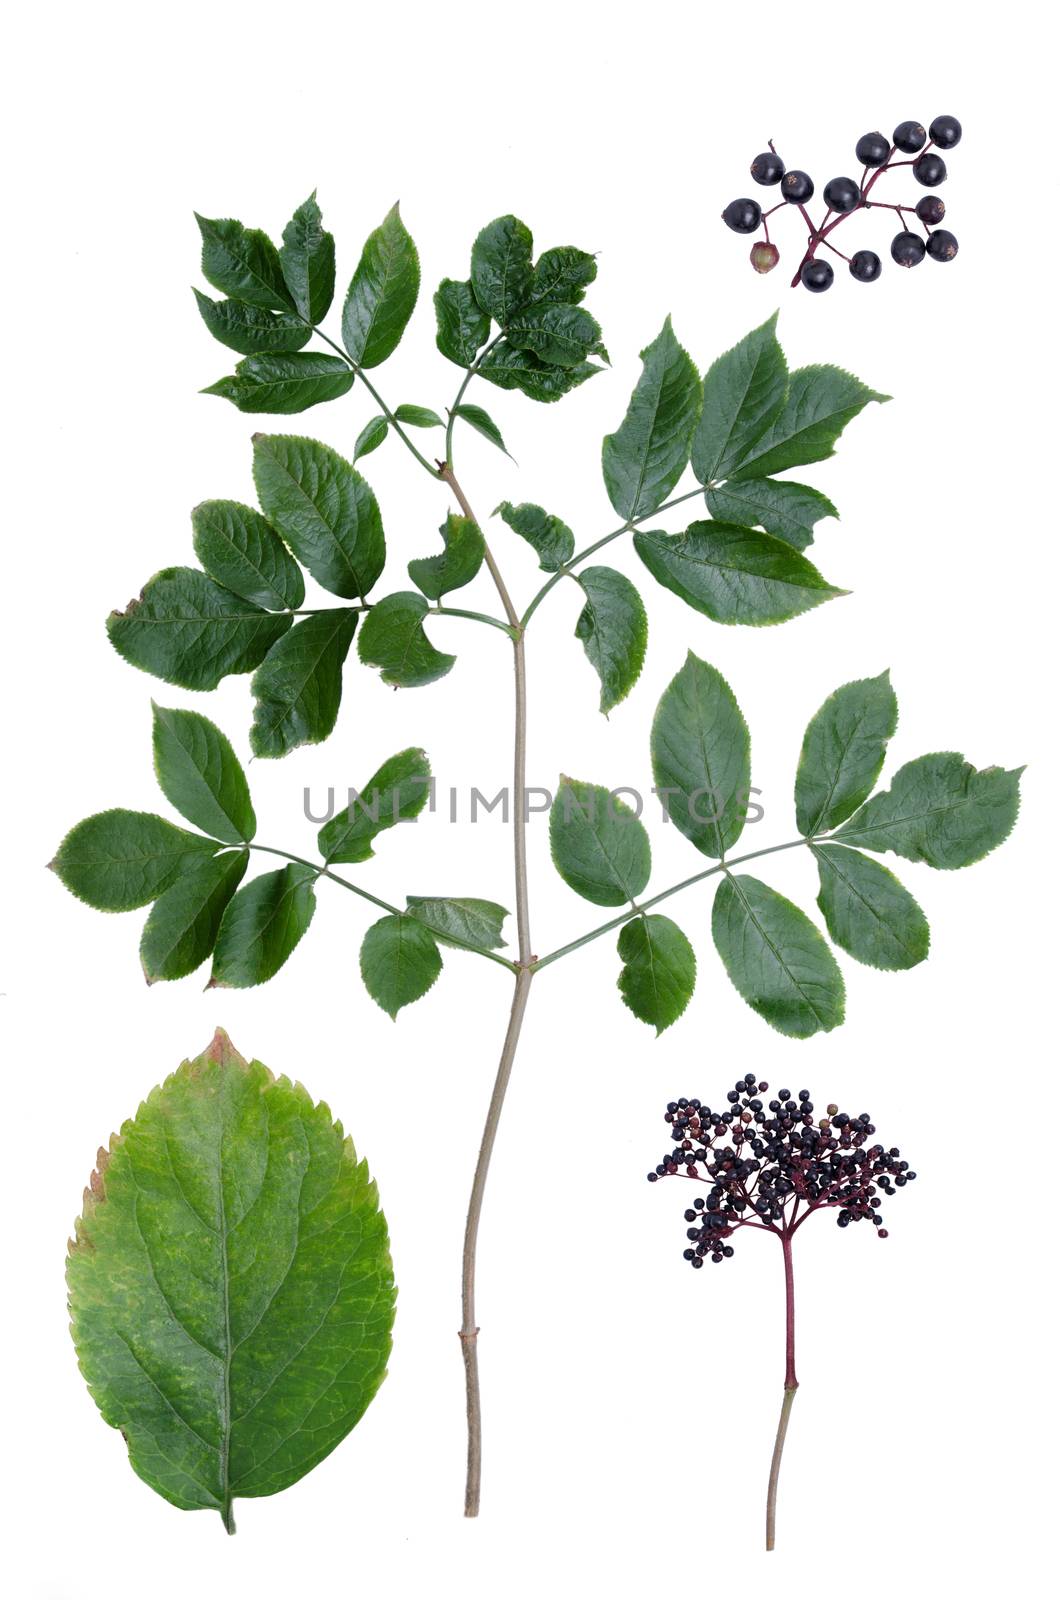 Sambucus nigra leaves and berries isolated on white background.